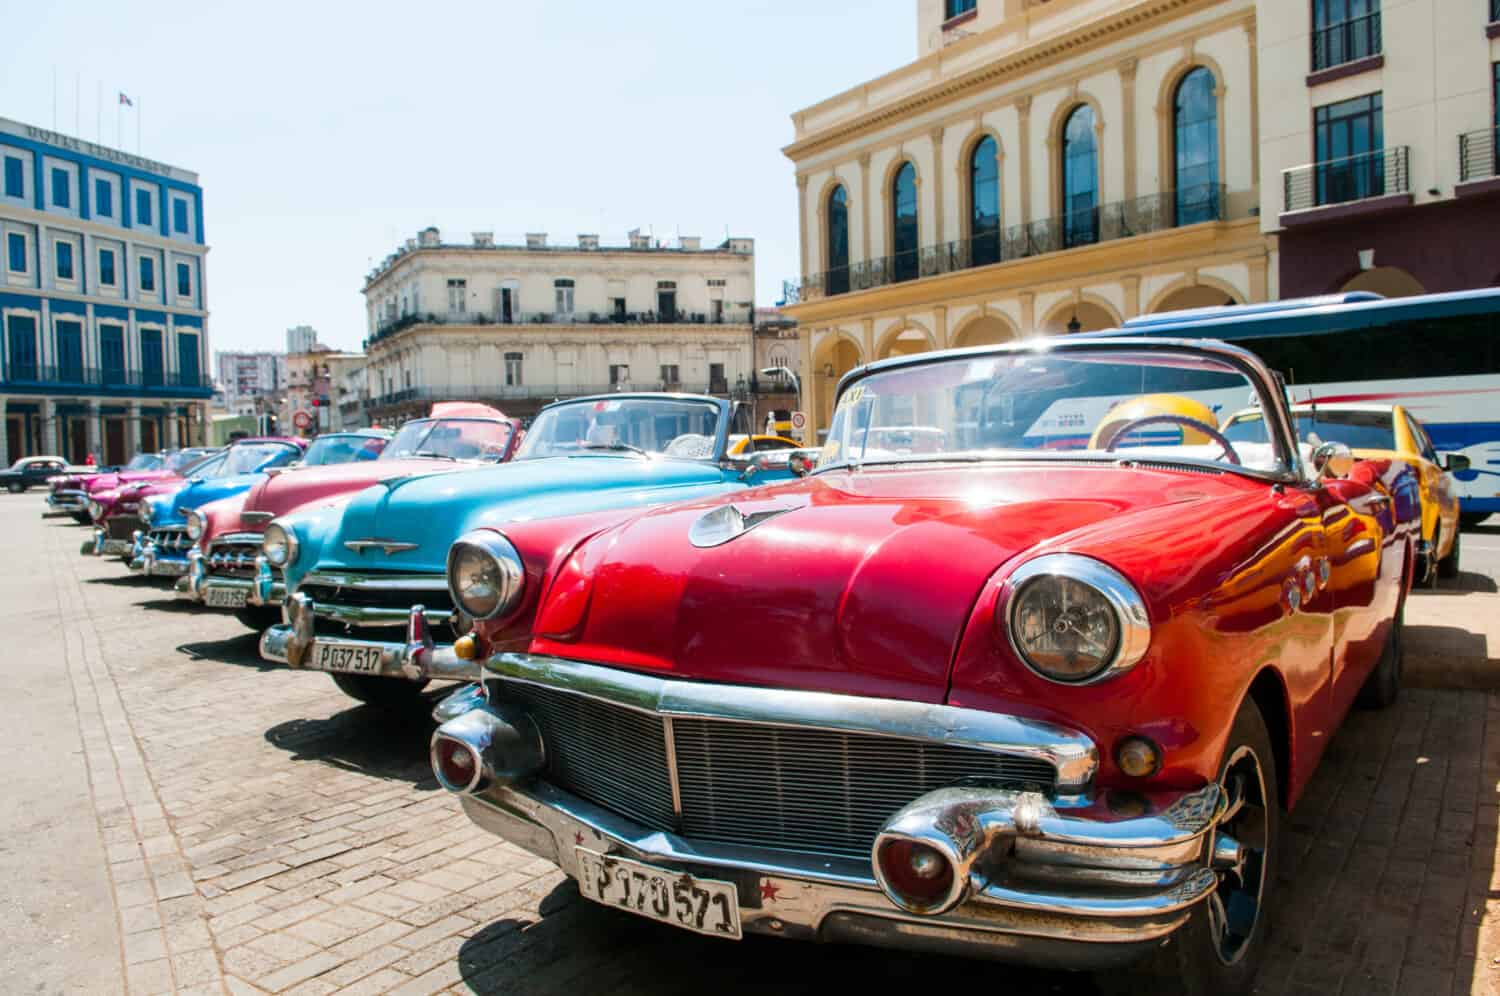 Auto d'epoca dell'Avana Cuba